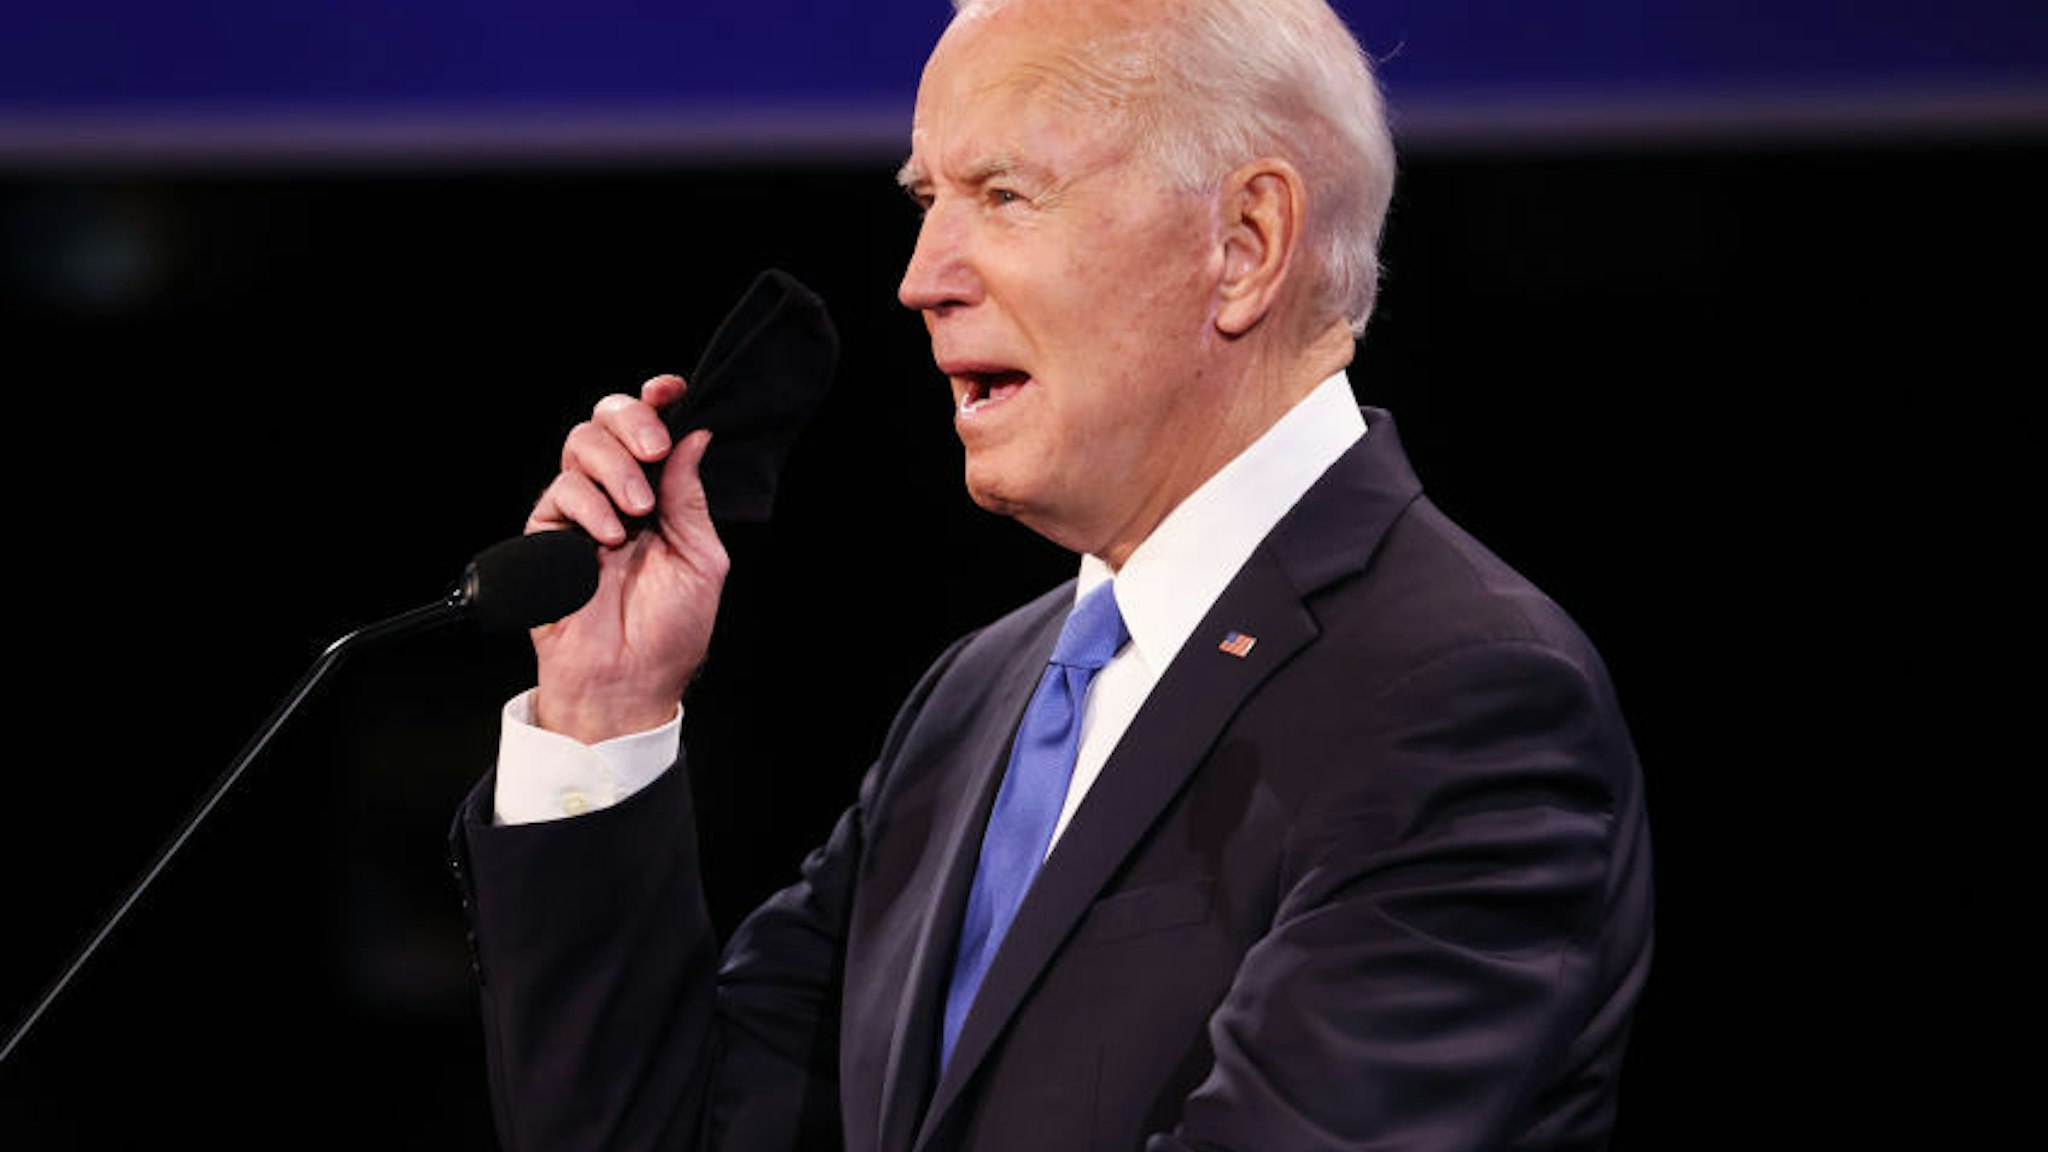 Democratic presidential nominee Joe Biden participates in the final presidential debate against U.S. President Donald Trump at Belmont University on October 22, 2020 in Nashville, Tennessee.